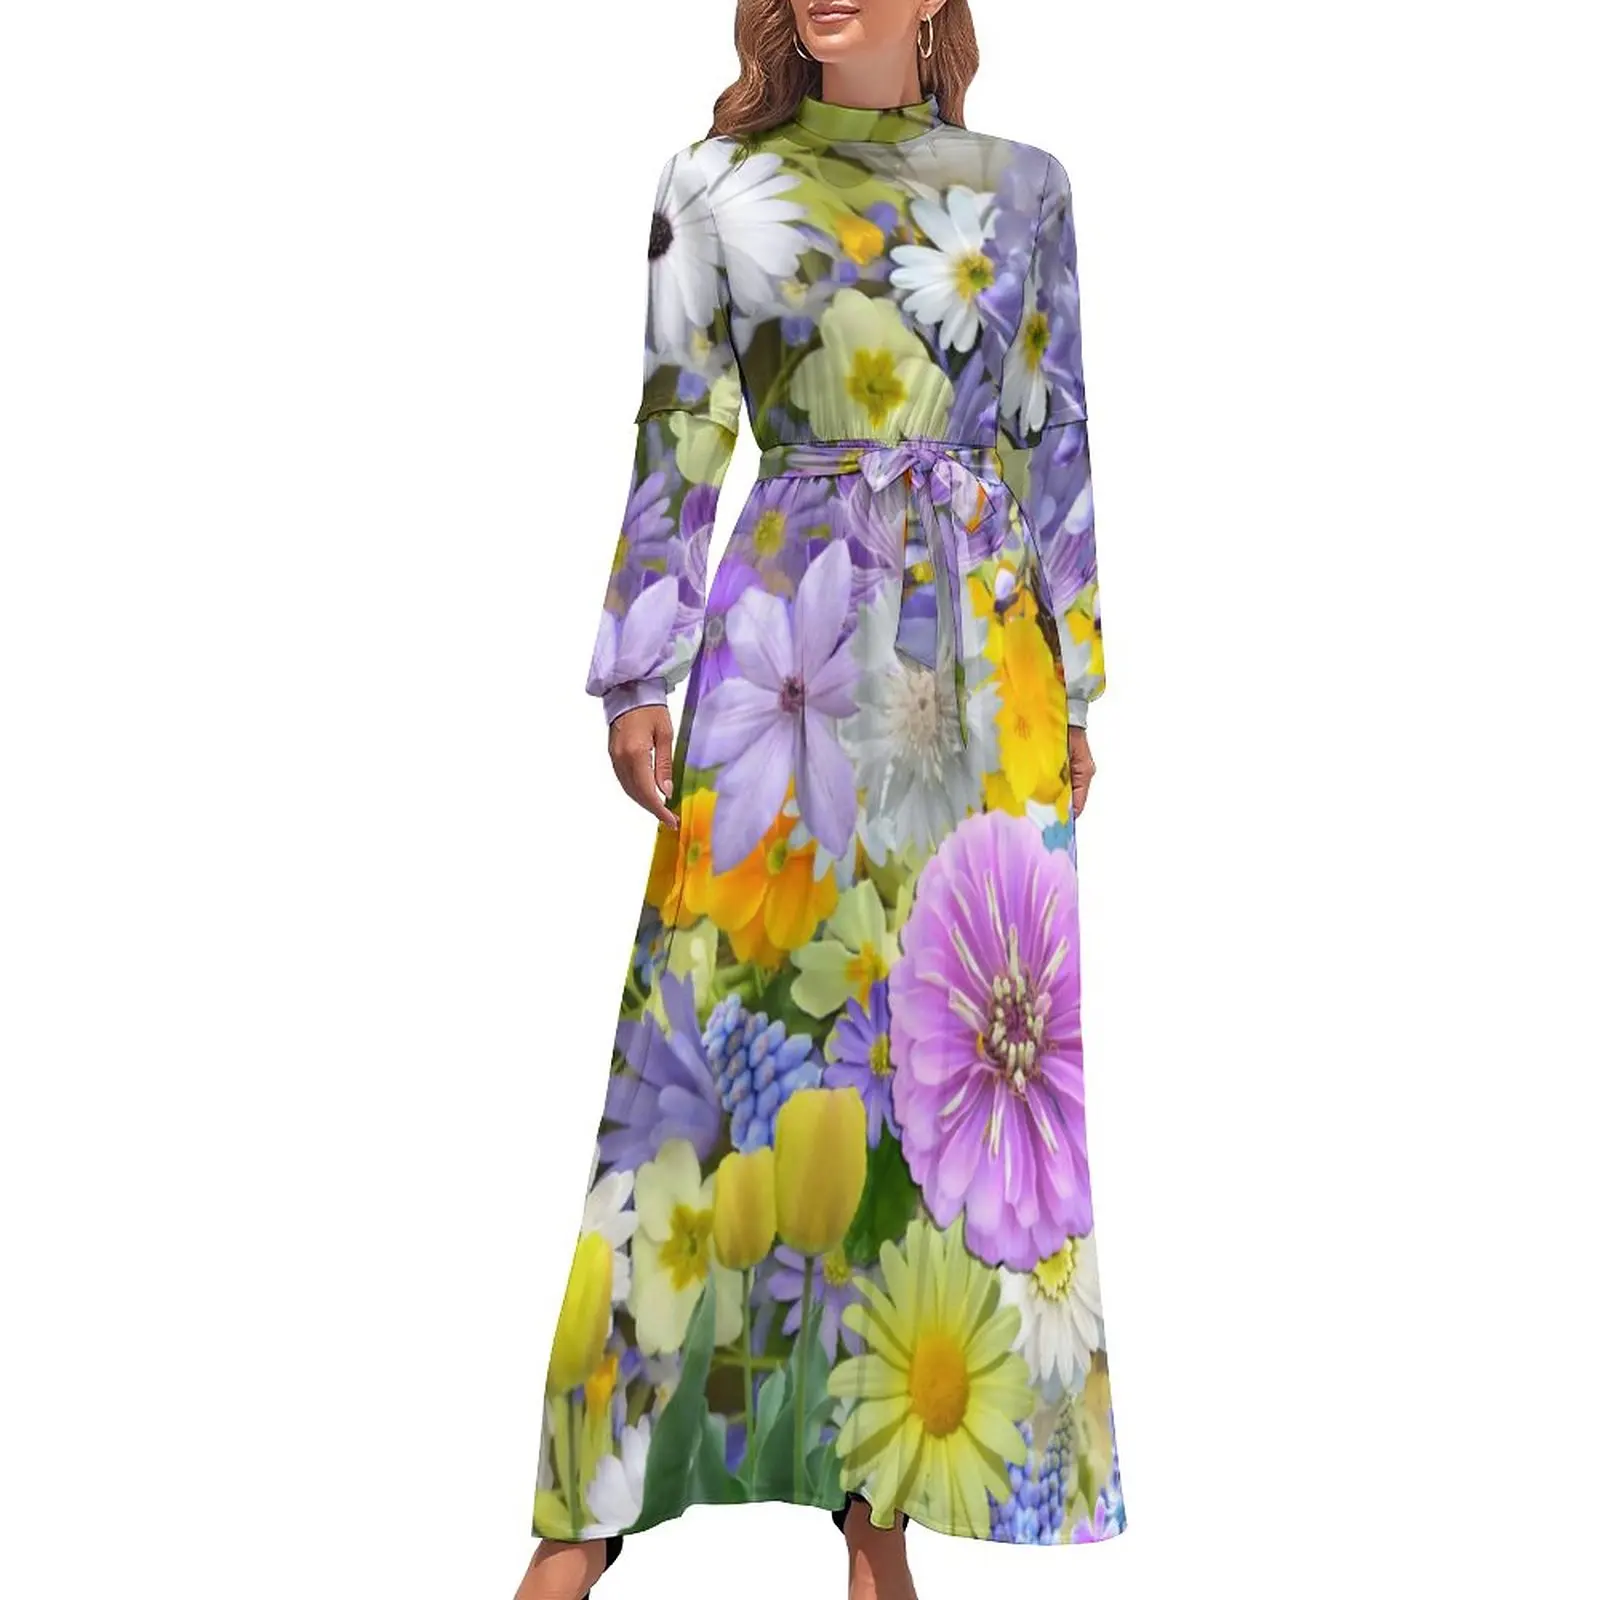 

Flower Print Dress High Waist Florals and Butterflies Graphic Bohemia Dresses Long Sleeve Fashion Long Maxi Dress Sexy Clothing